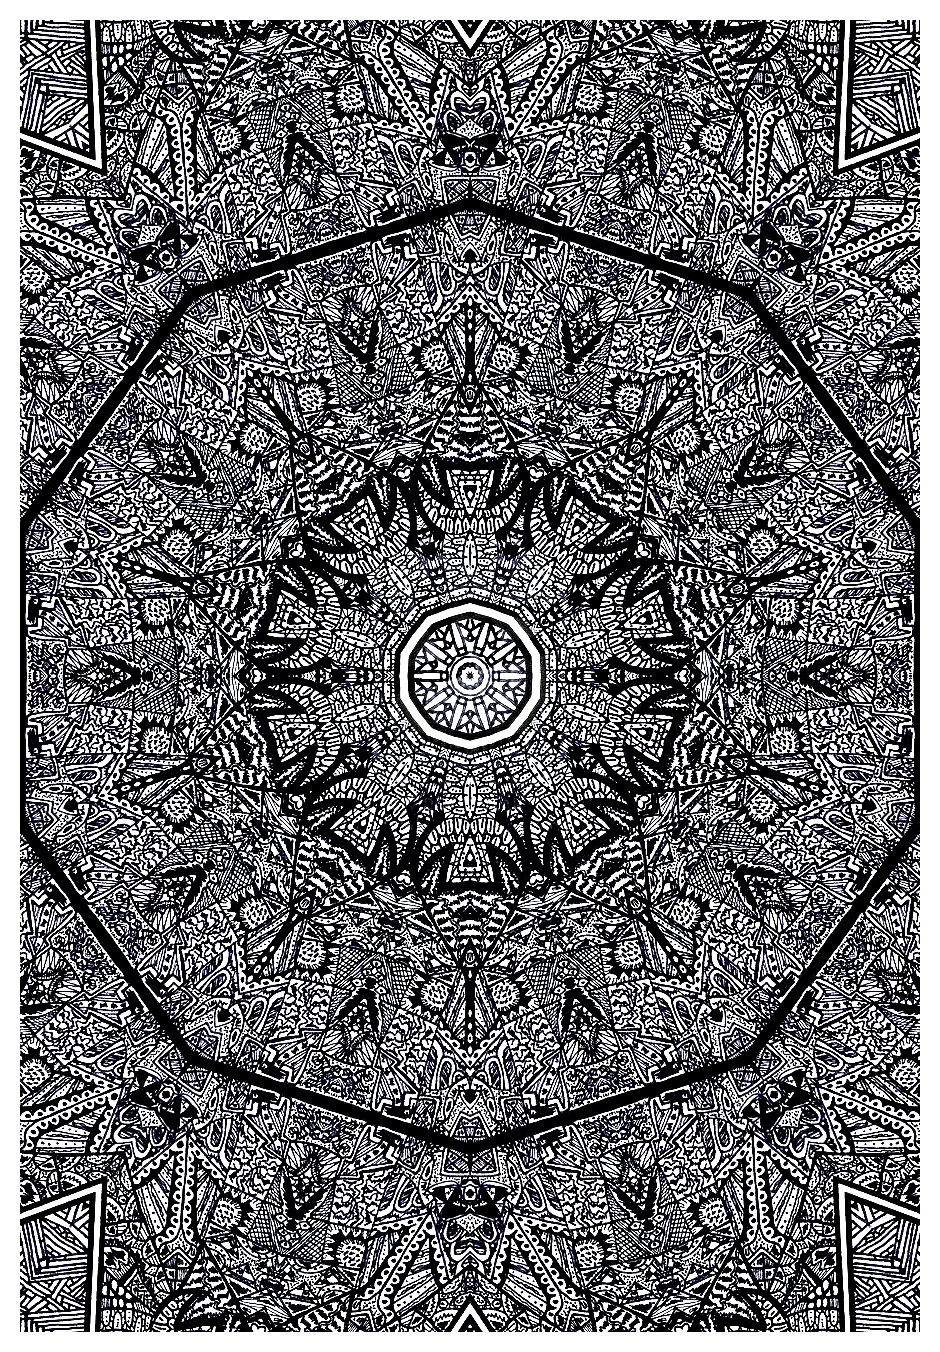 Kaleidoscope by intentonabstract